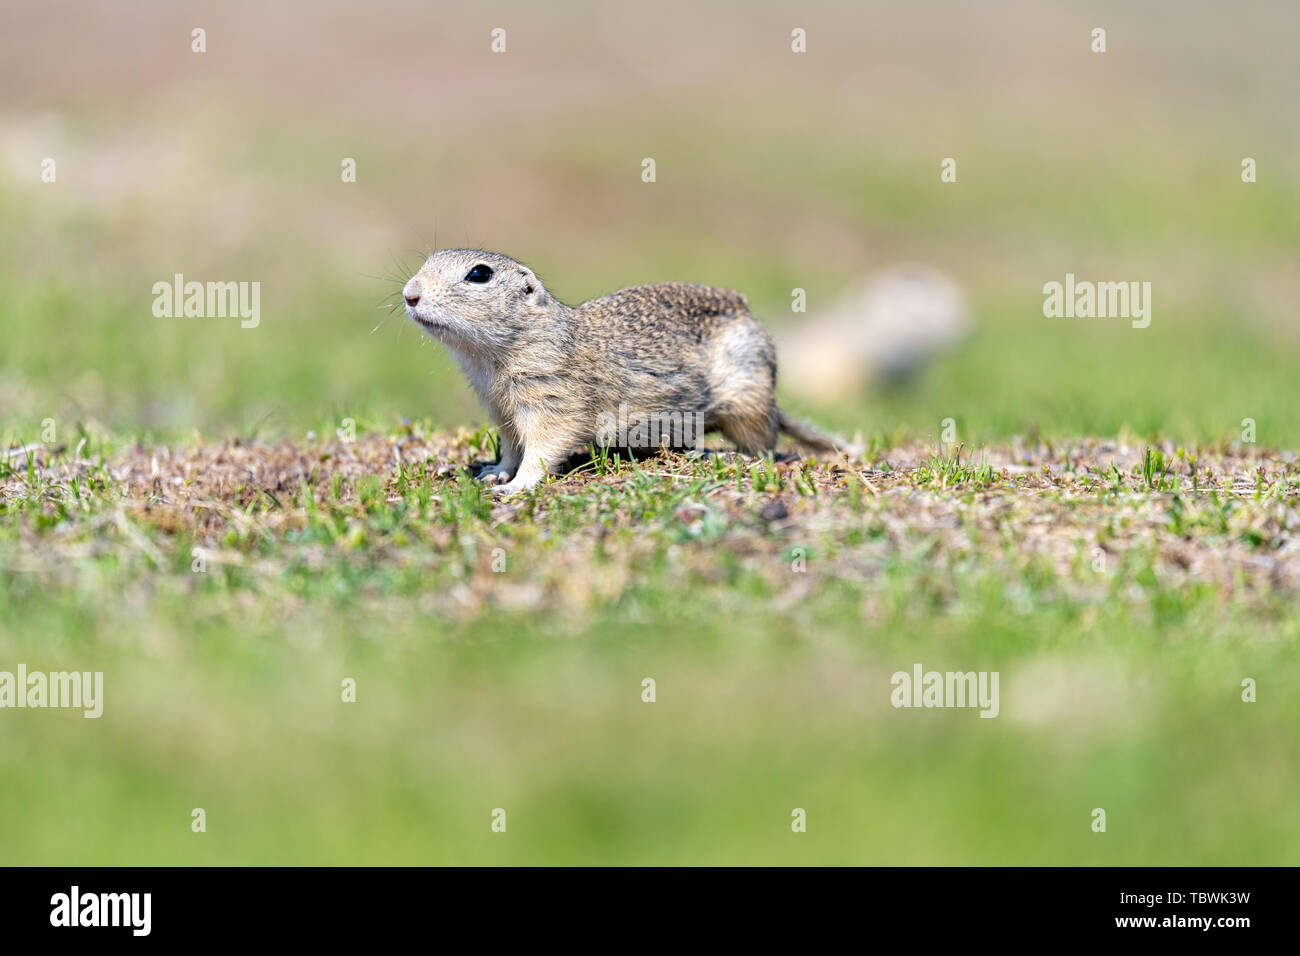 A wild european ground squirrel (Spermophilus citellus), also known as the European souslik in their habitat. Early spring. Stock Photo